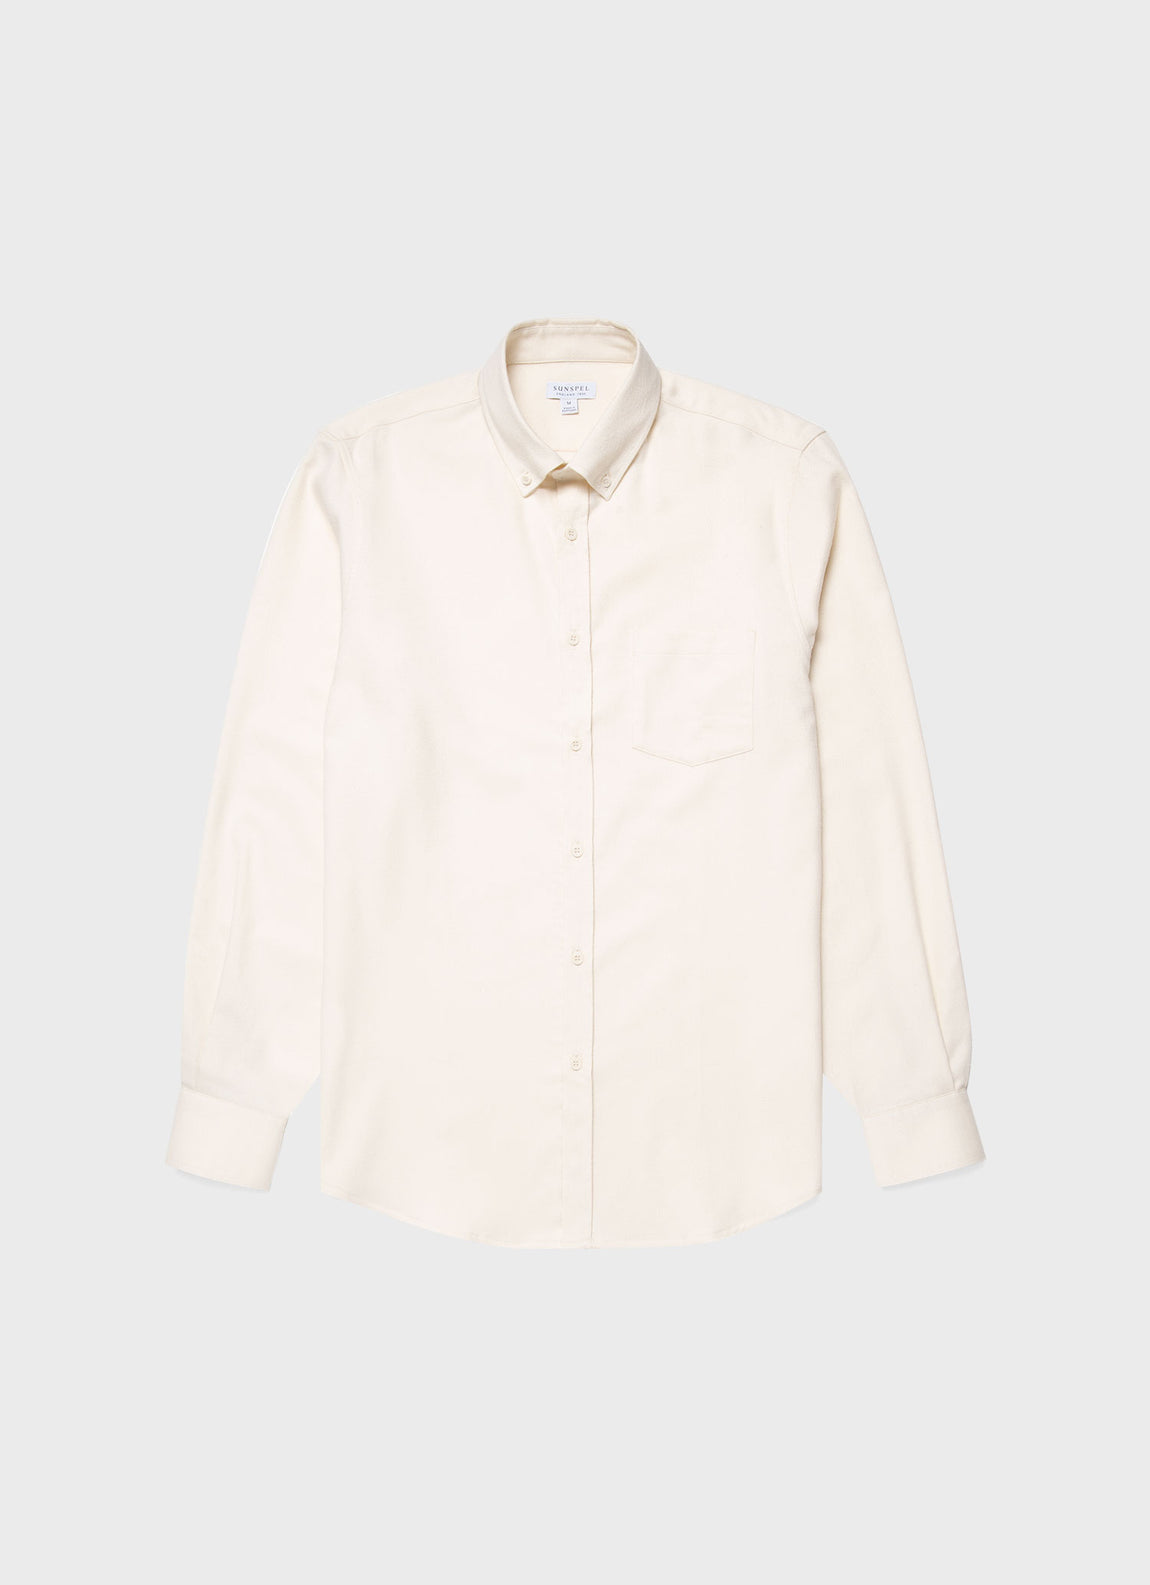 Men's Button Down Flannel Shirt in Ecru | Sunspel